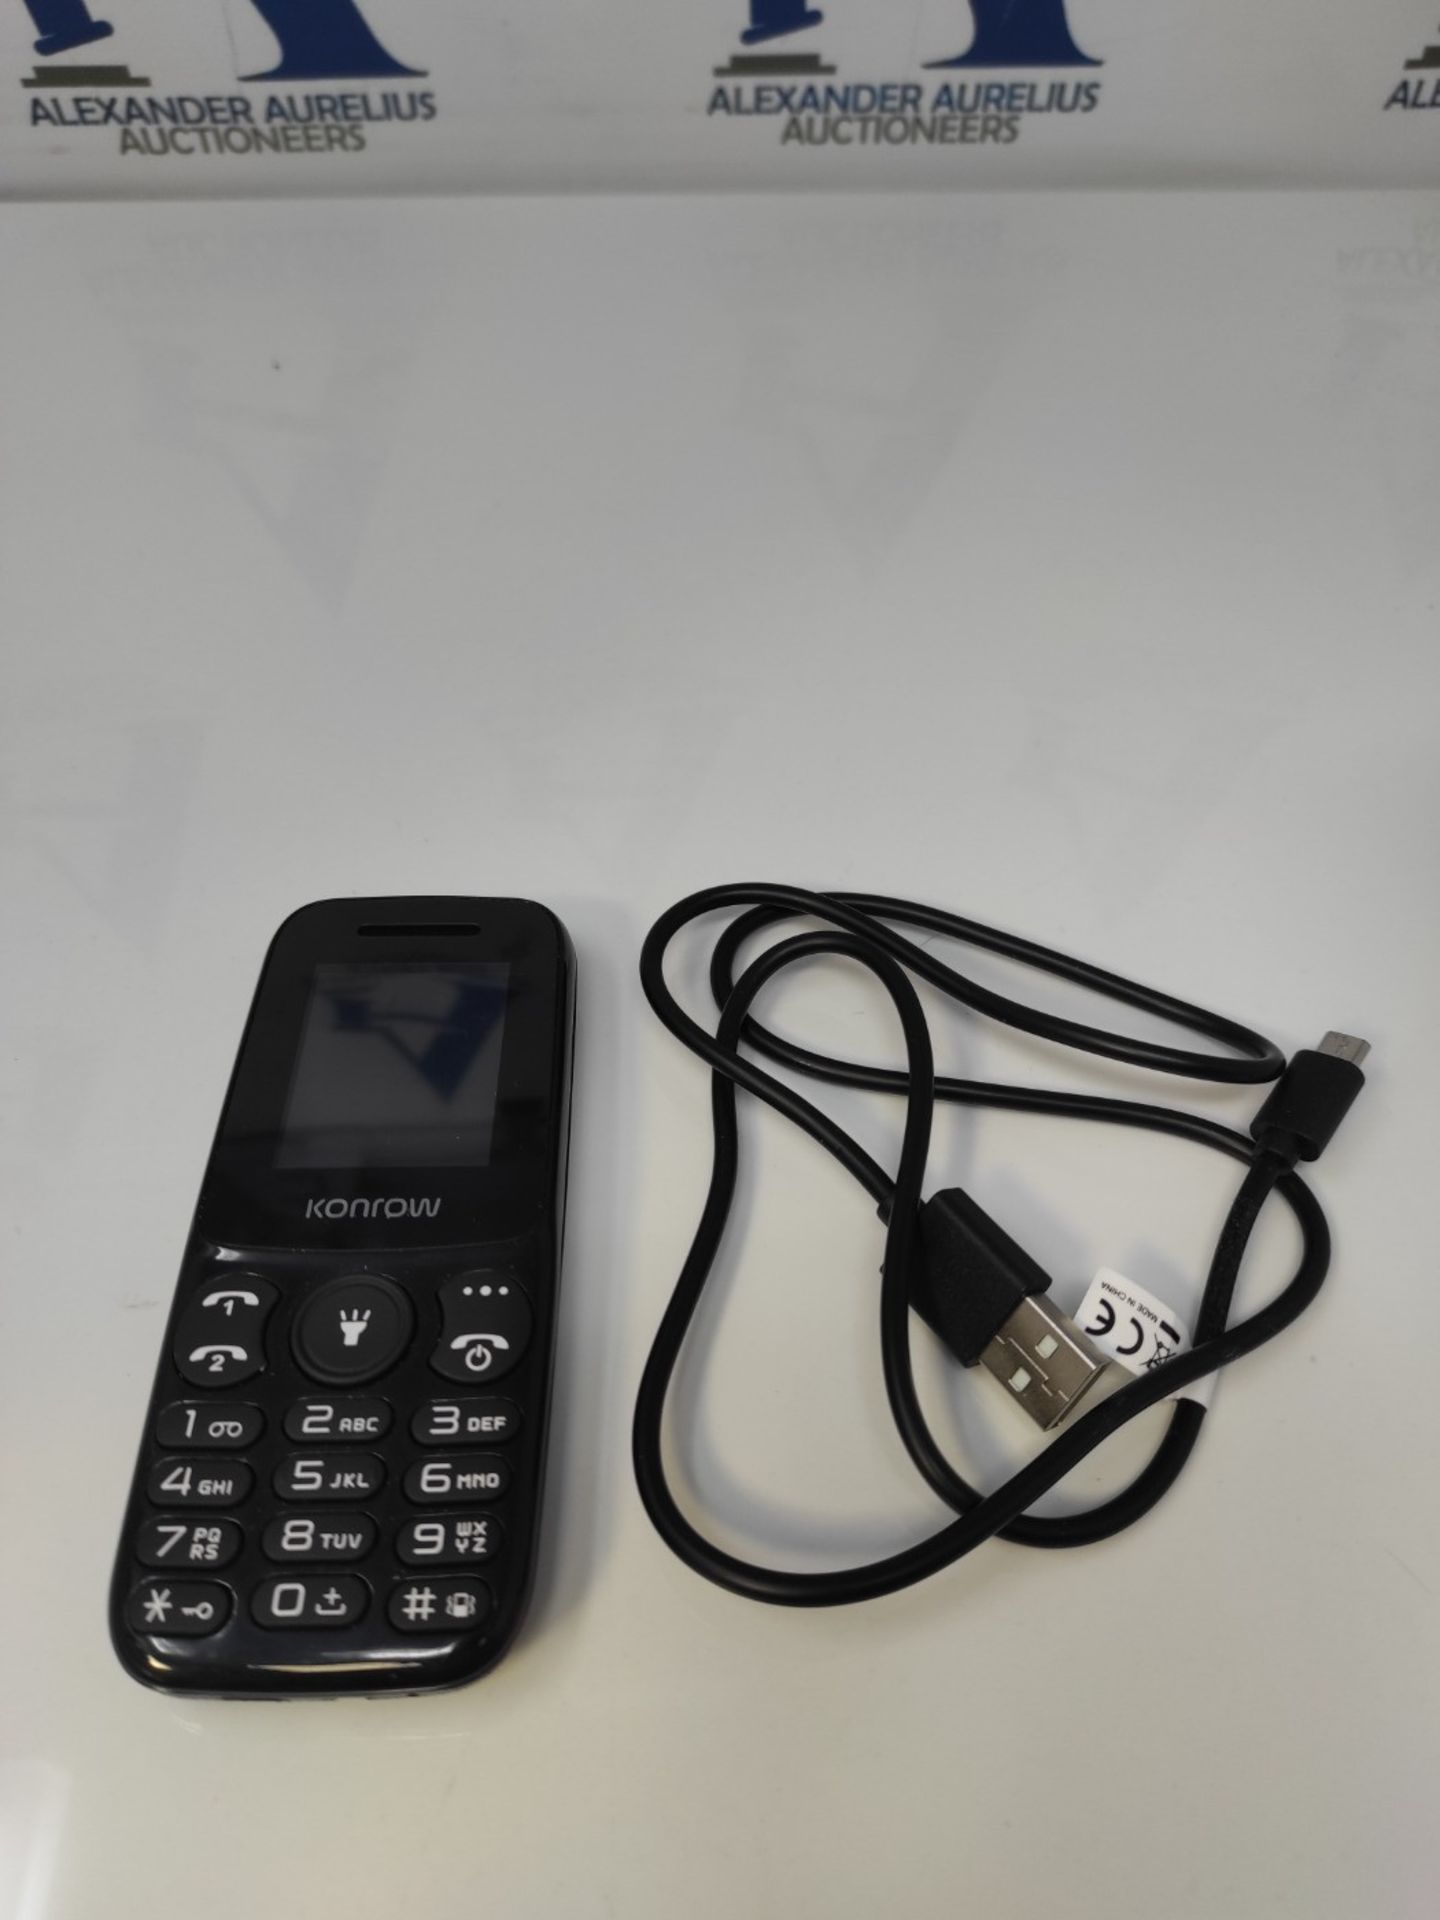 Konrow - Moby - 2G Dual SIM GSM Phone - 1.77" Screen, 32MB Expandable Memory, Bluetoot - Image 2 of 2